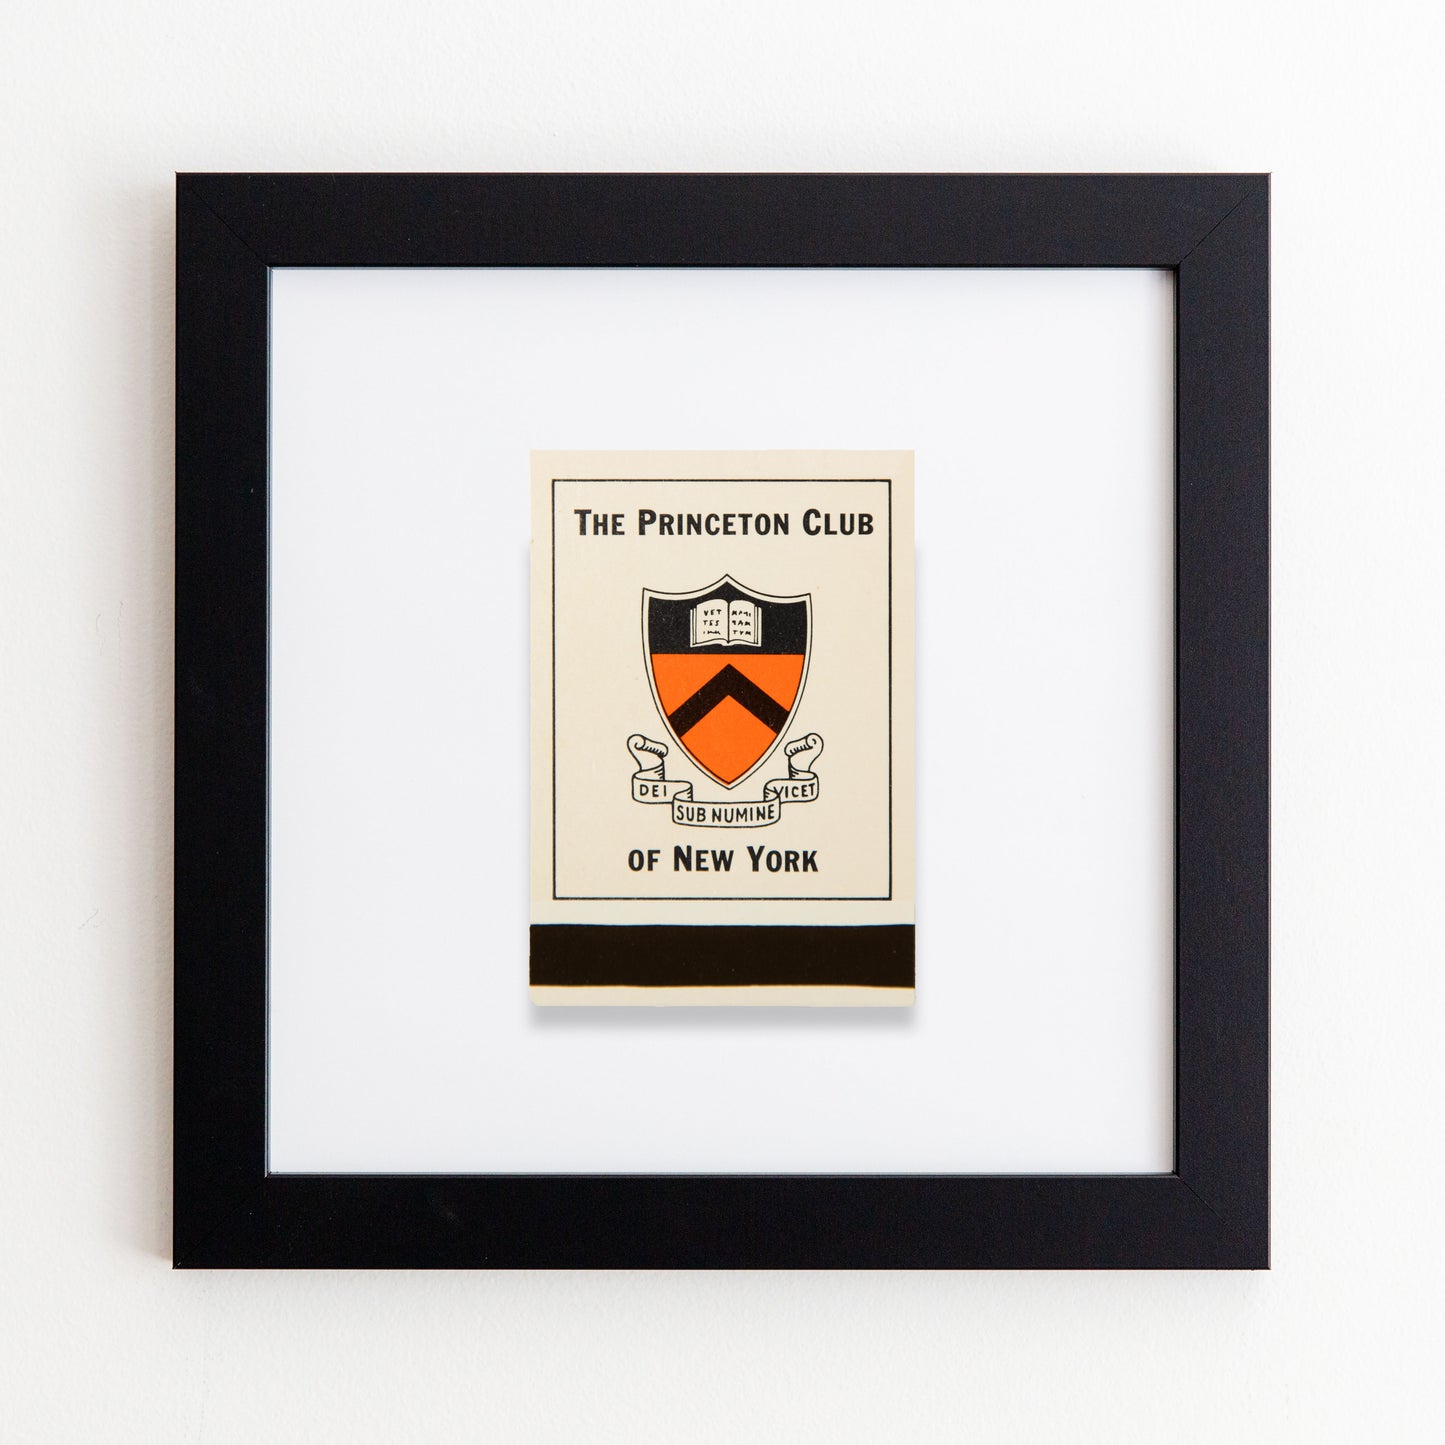 The Princeton Club